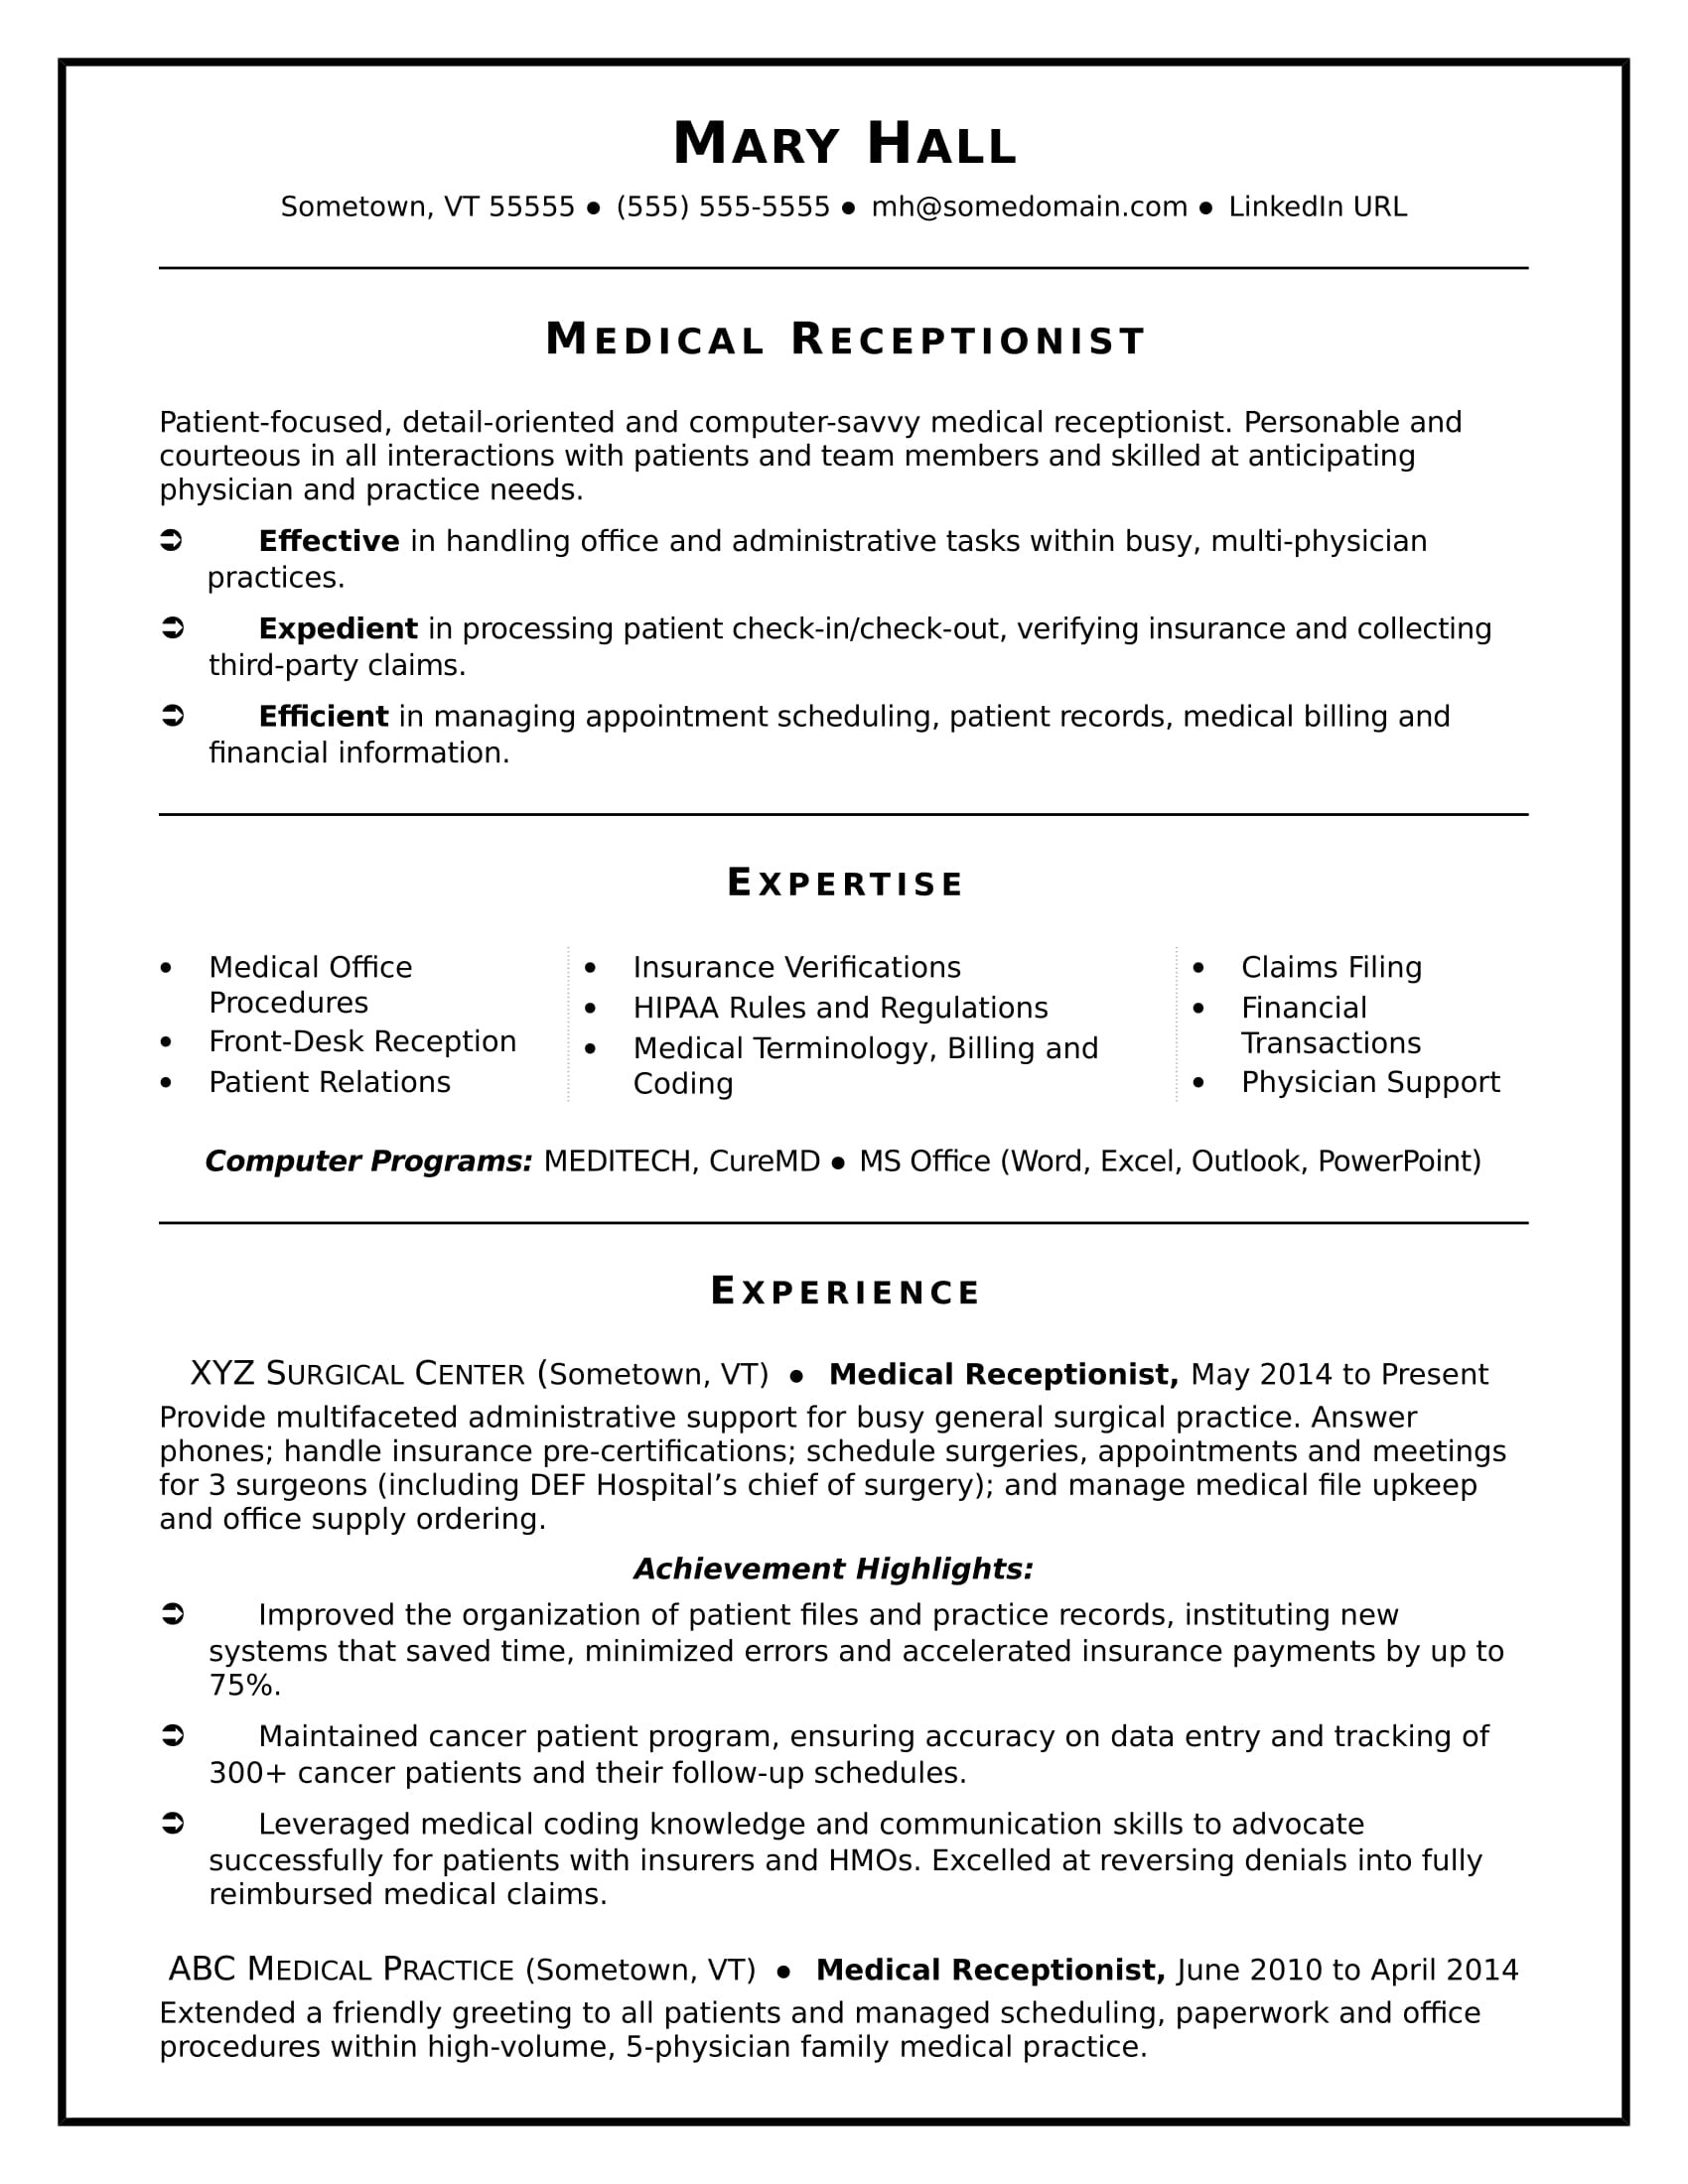 Sample Resume for Unit Secretary In A Hospital Medical Receptionist Resume Sample Monster.com